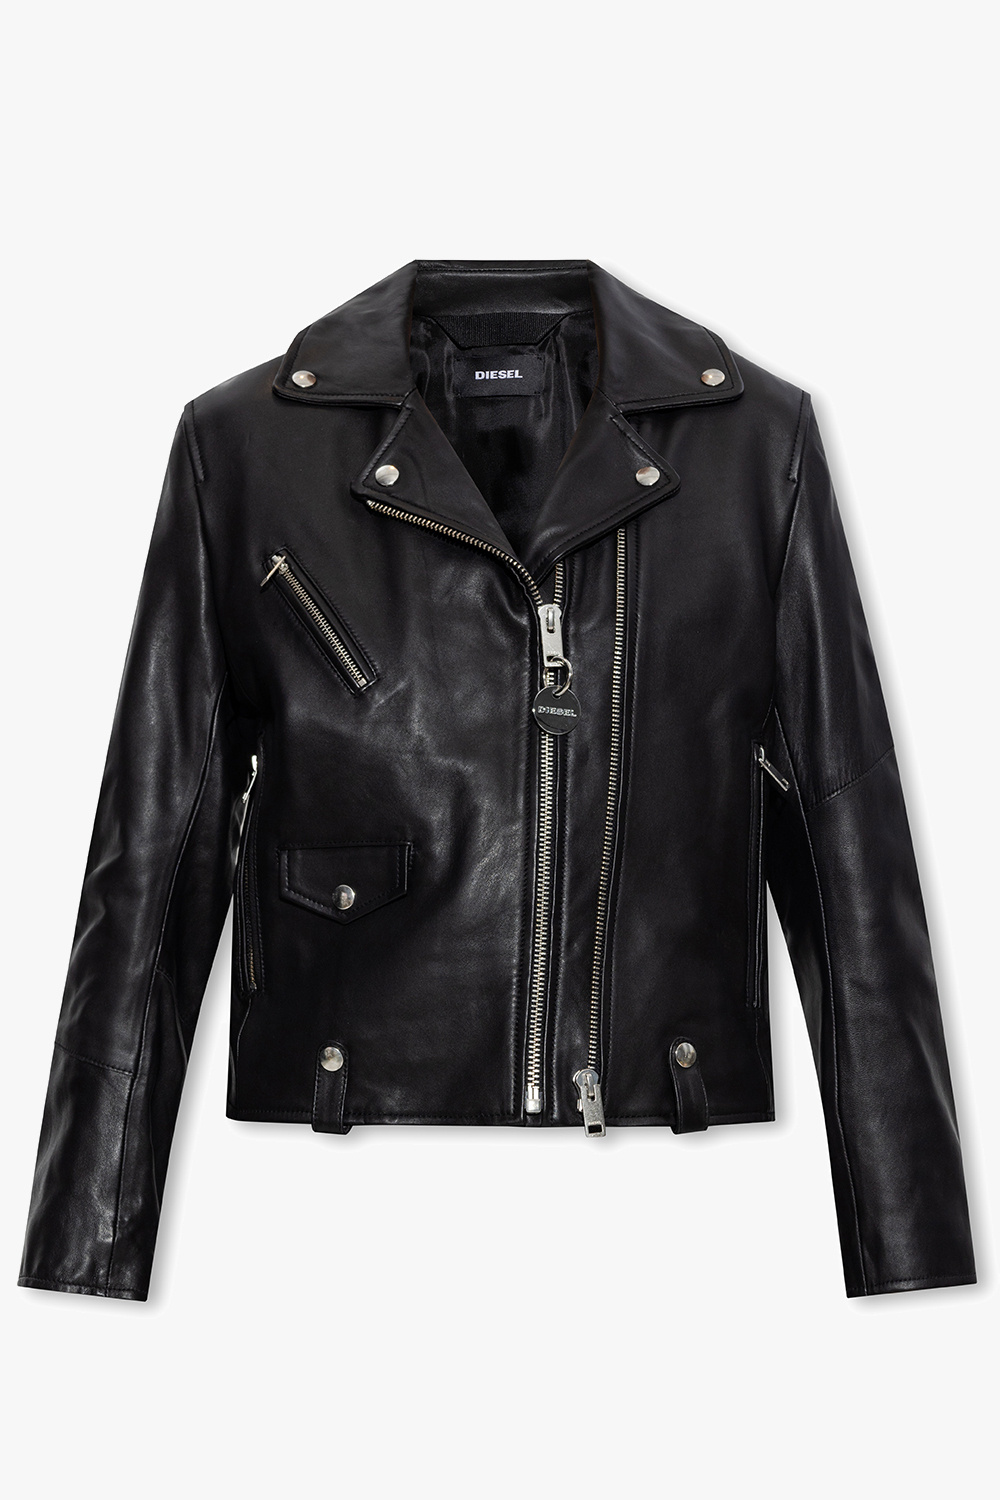 Diesel embossed-logo Leather Jacket - Farfetch